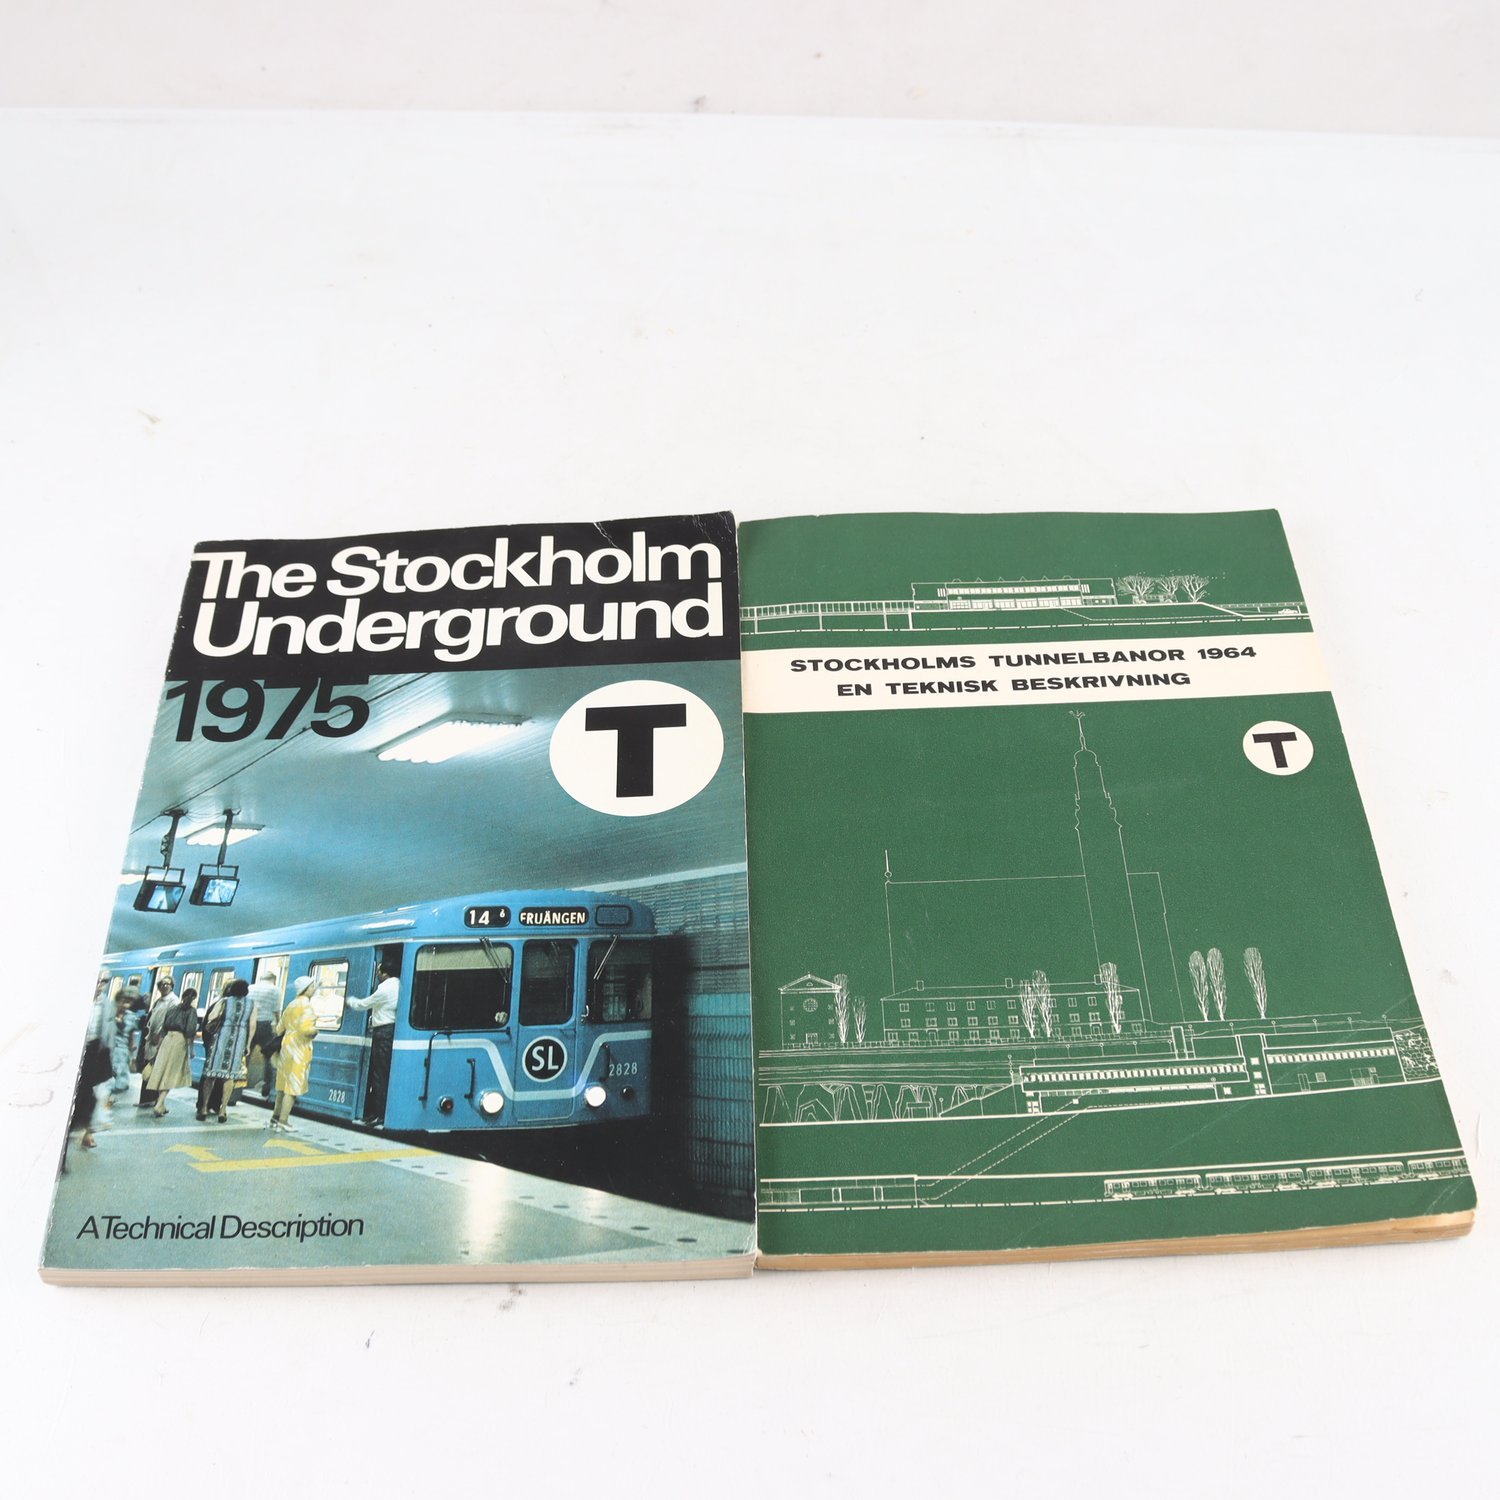 Stockholms tunnelbanor 1964 + The Stockholm Underground 1975